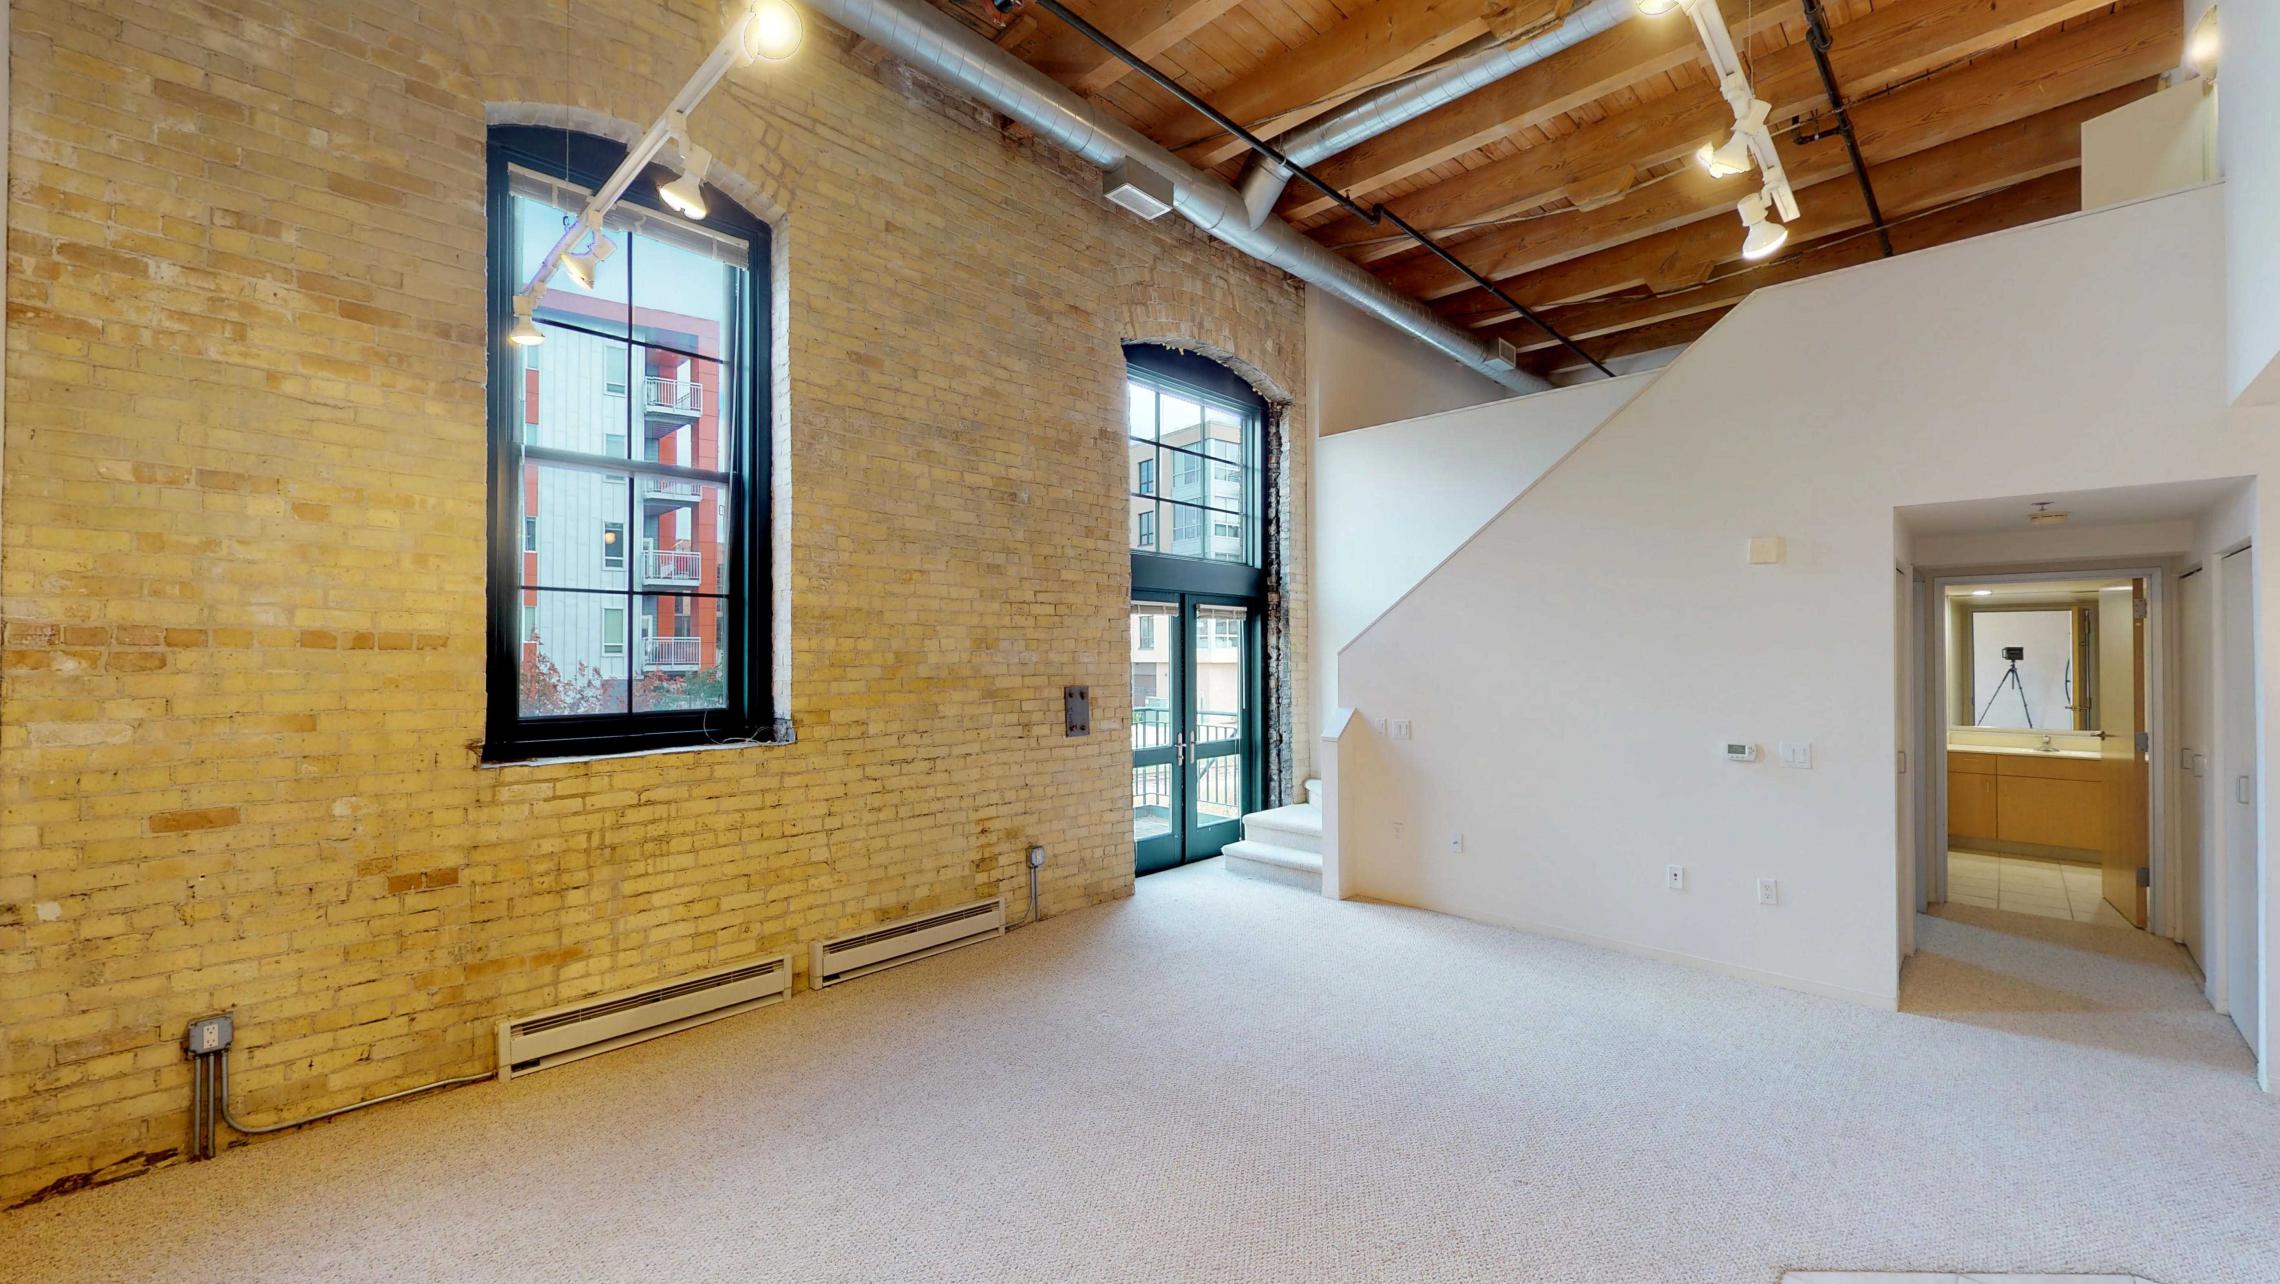 Tobacco-Lofts-E203-lofted-two-bedroom-exposed-brick-upscale-design-historic